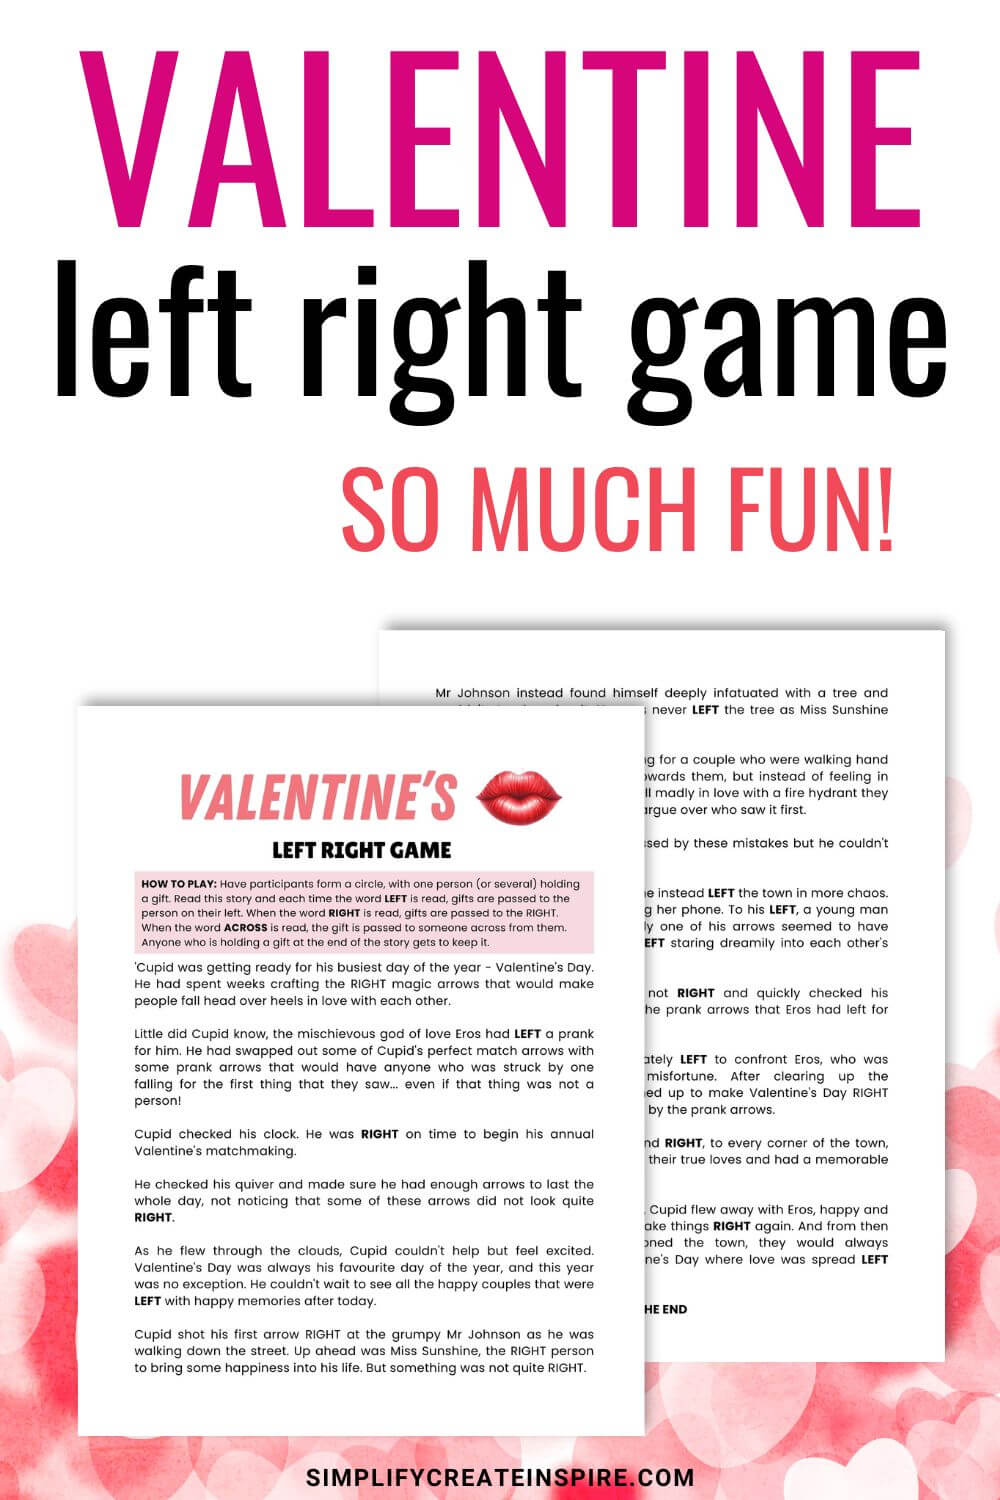 Valentine left right game.